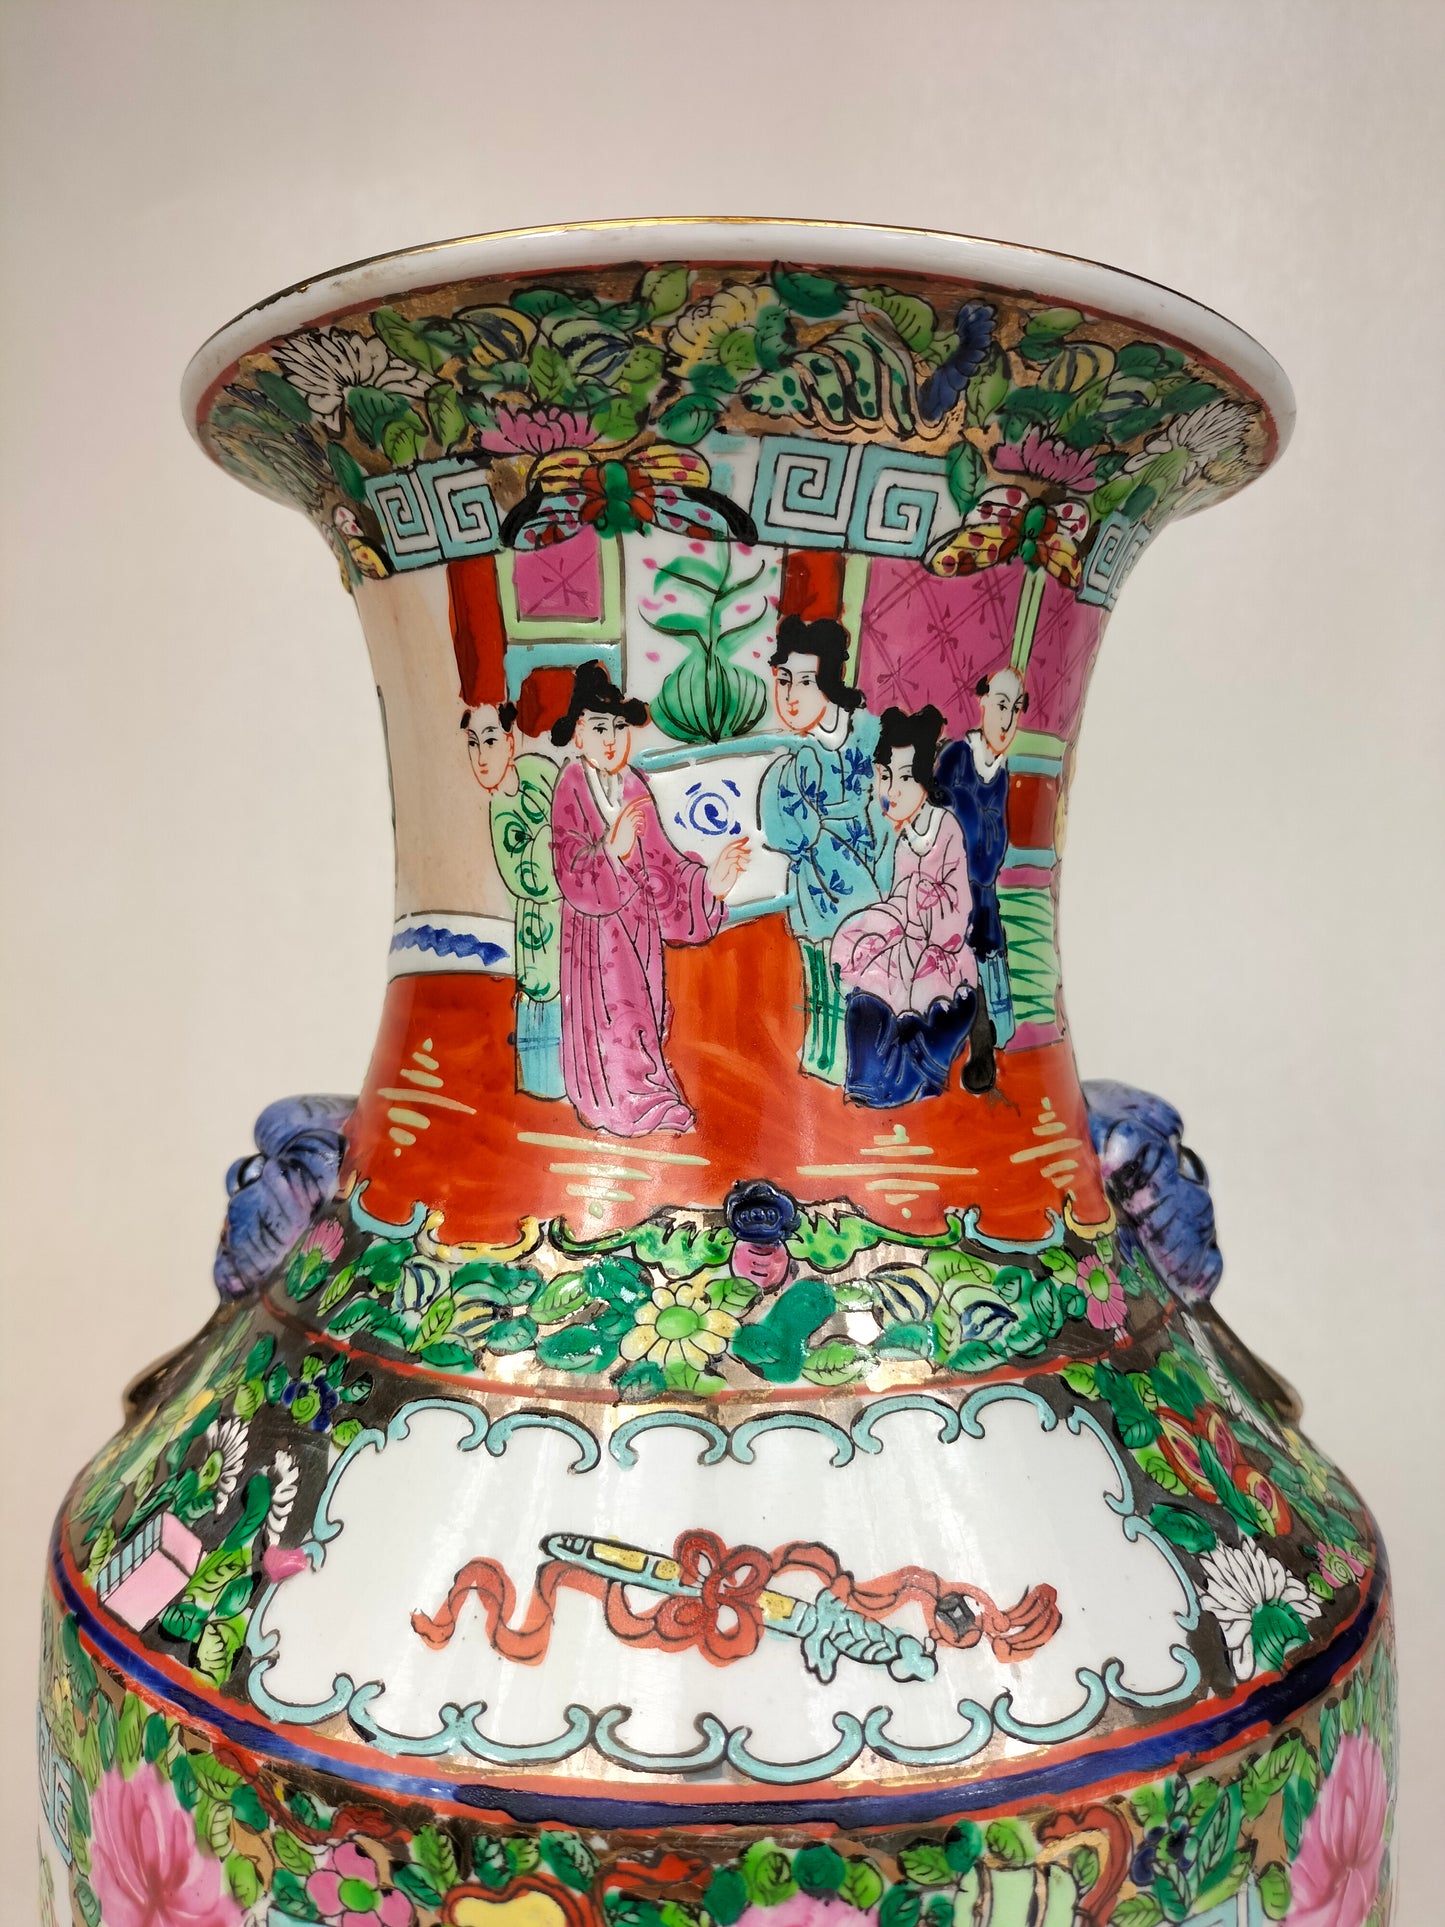 Chinese canton rose medallion vase // Mid 20th century